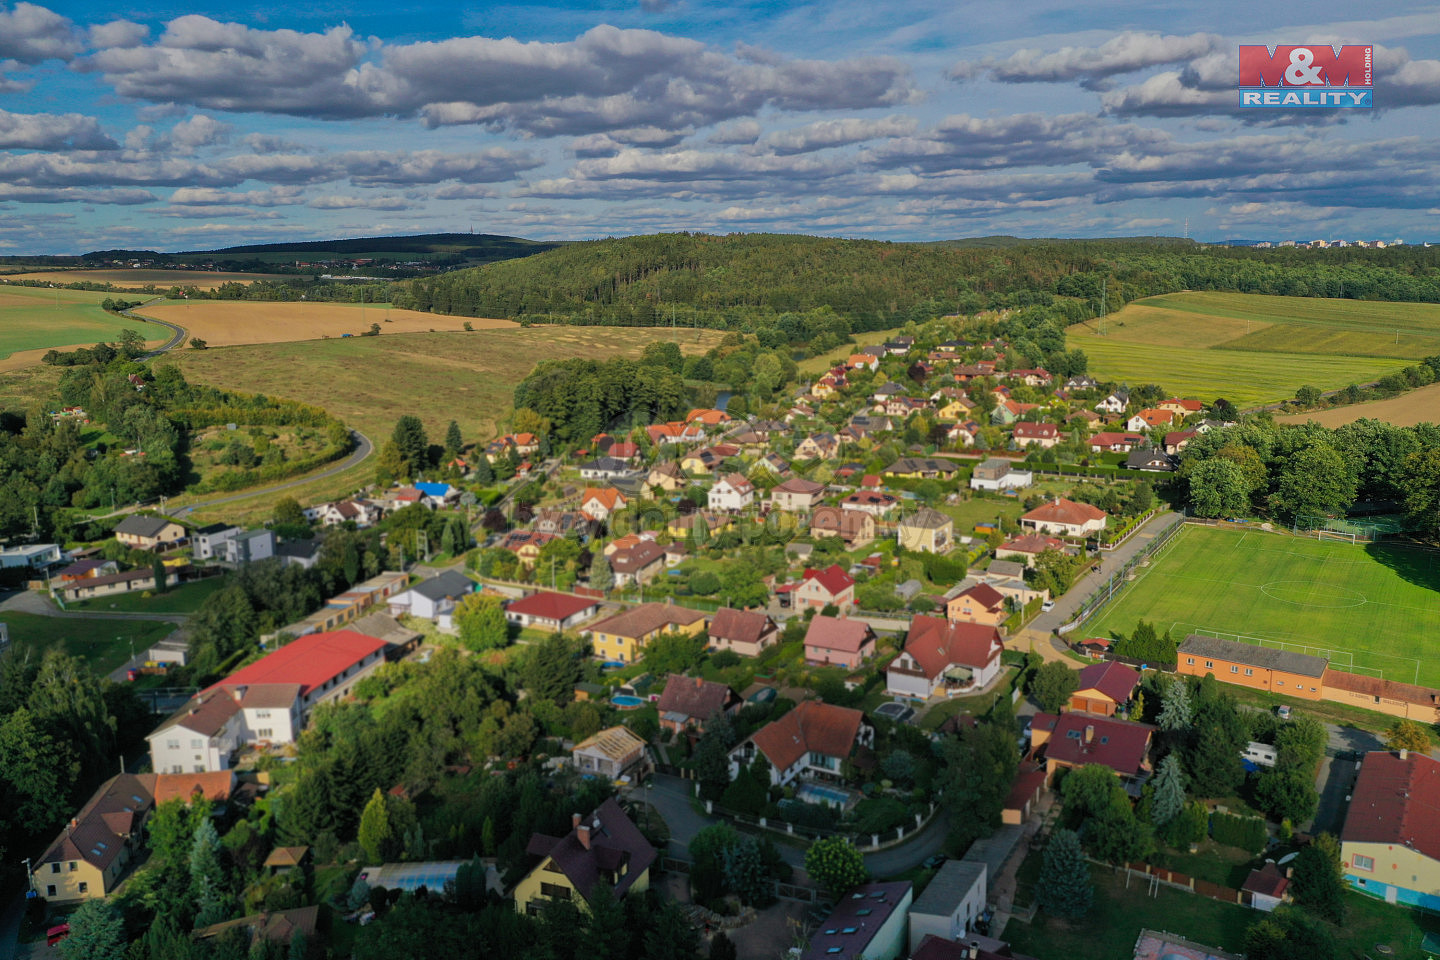 Plzeň - Malesice